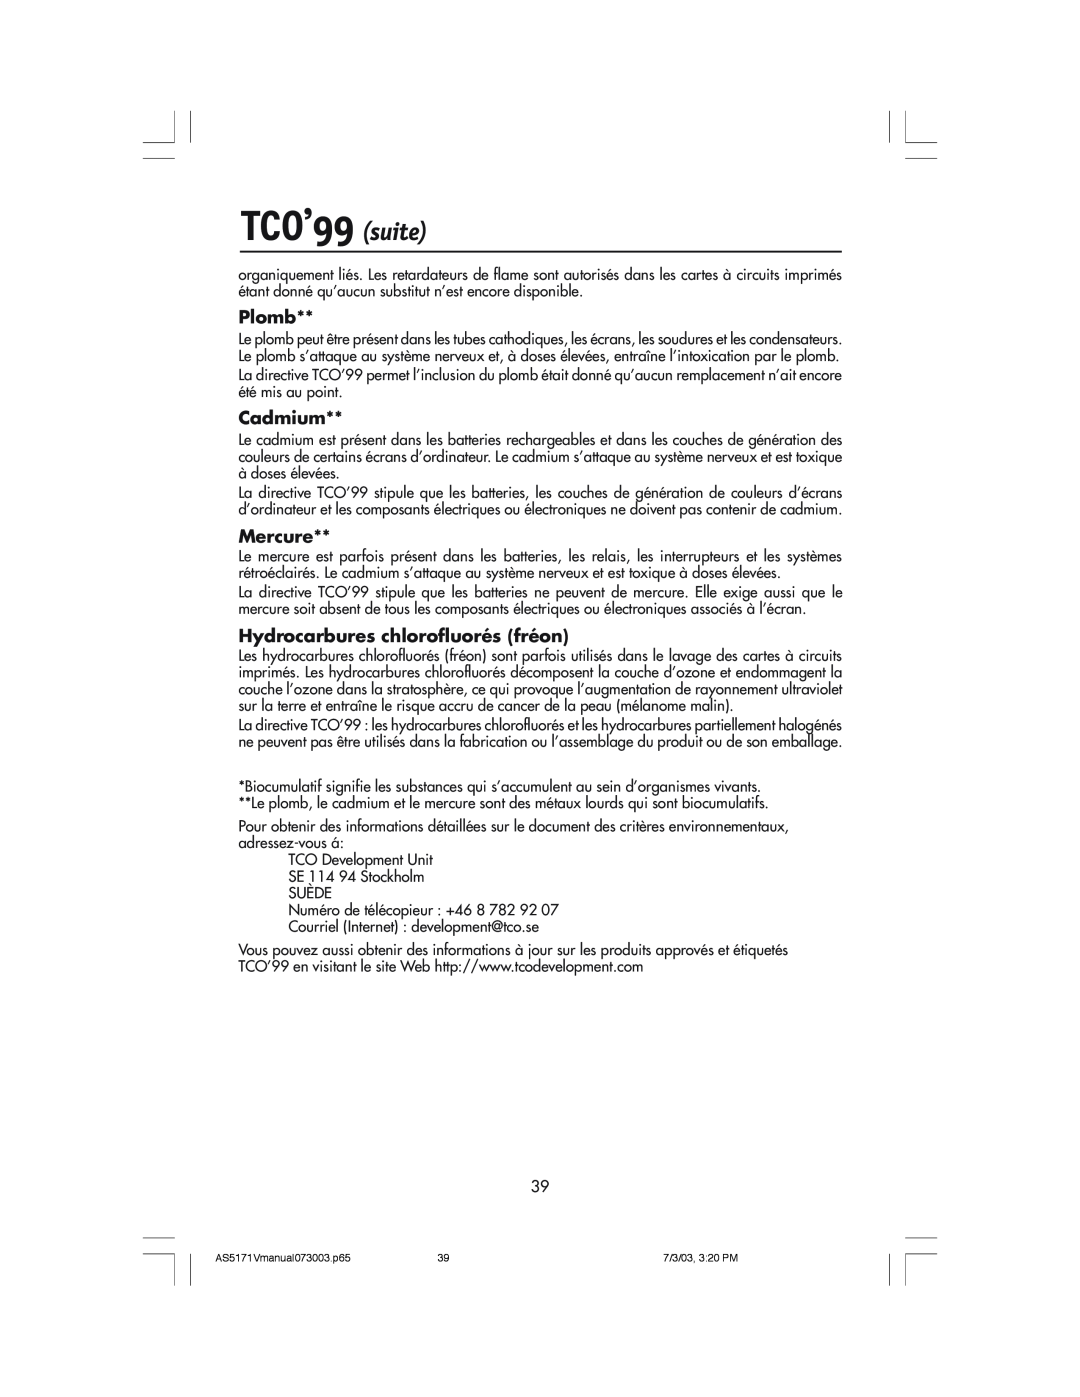 NEC LCD71V manual TCO’99 suite, Plomb, Cadmium, Mercure, Hydrocarbures chlorofluorés fréon 